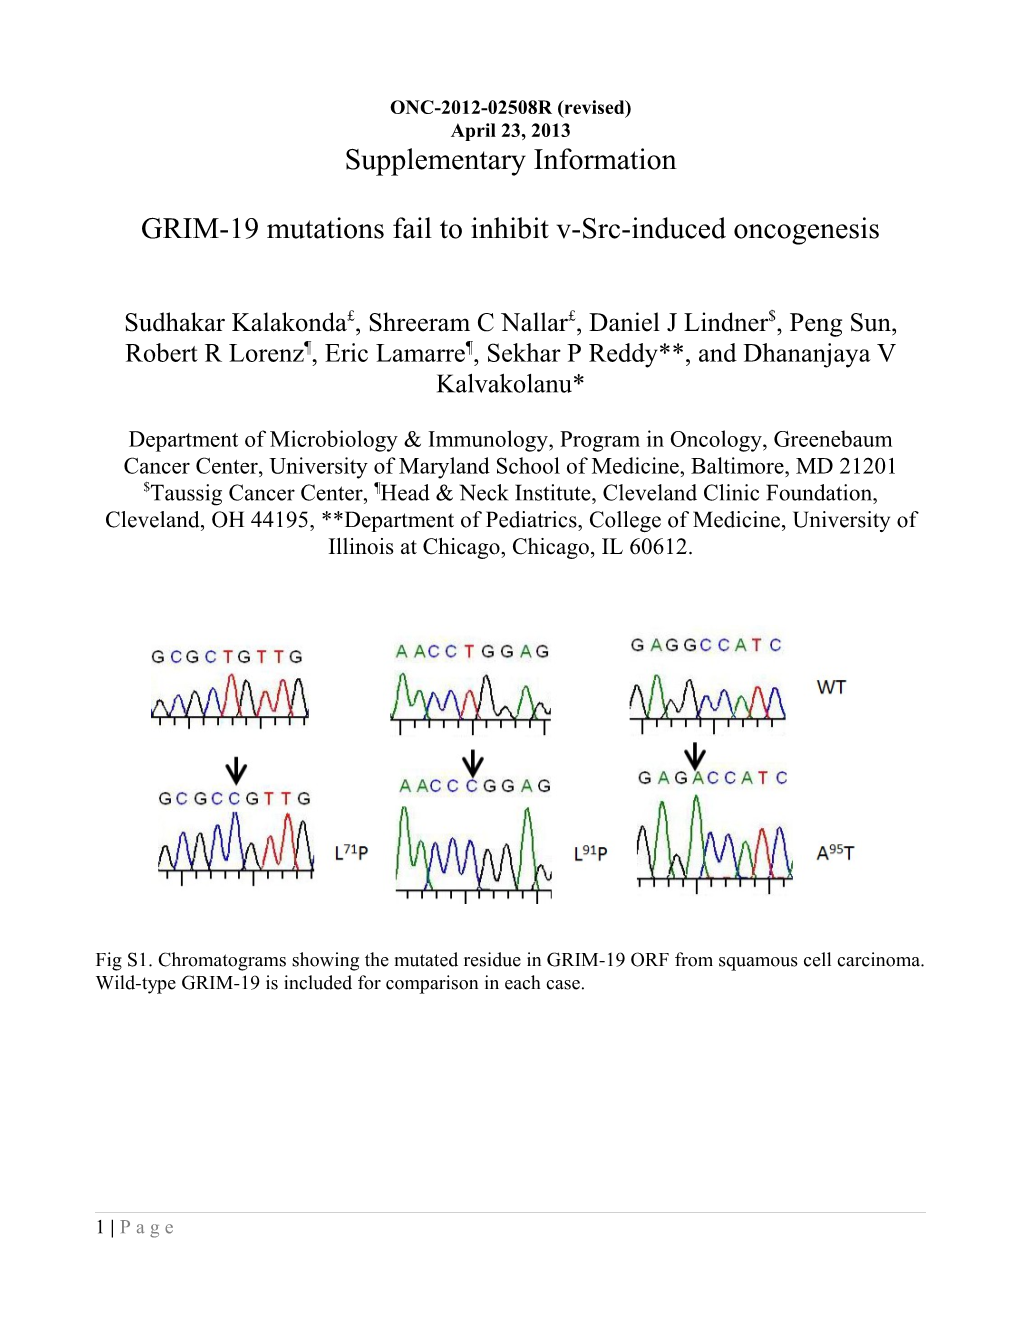 GRIM-19 Mutations Fail to Inhibitv-Src-Inducedoncogenesis